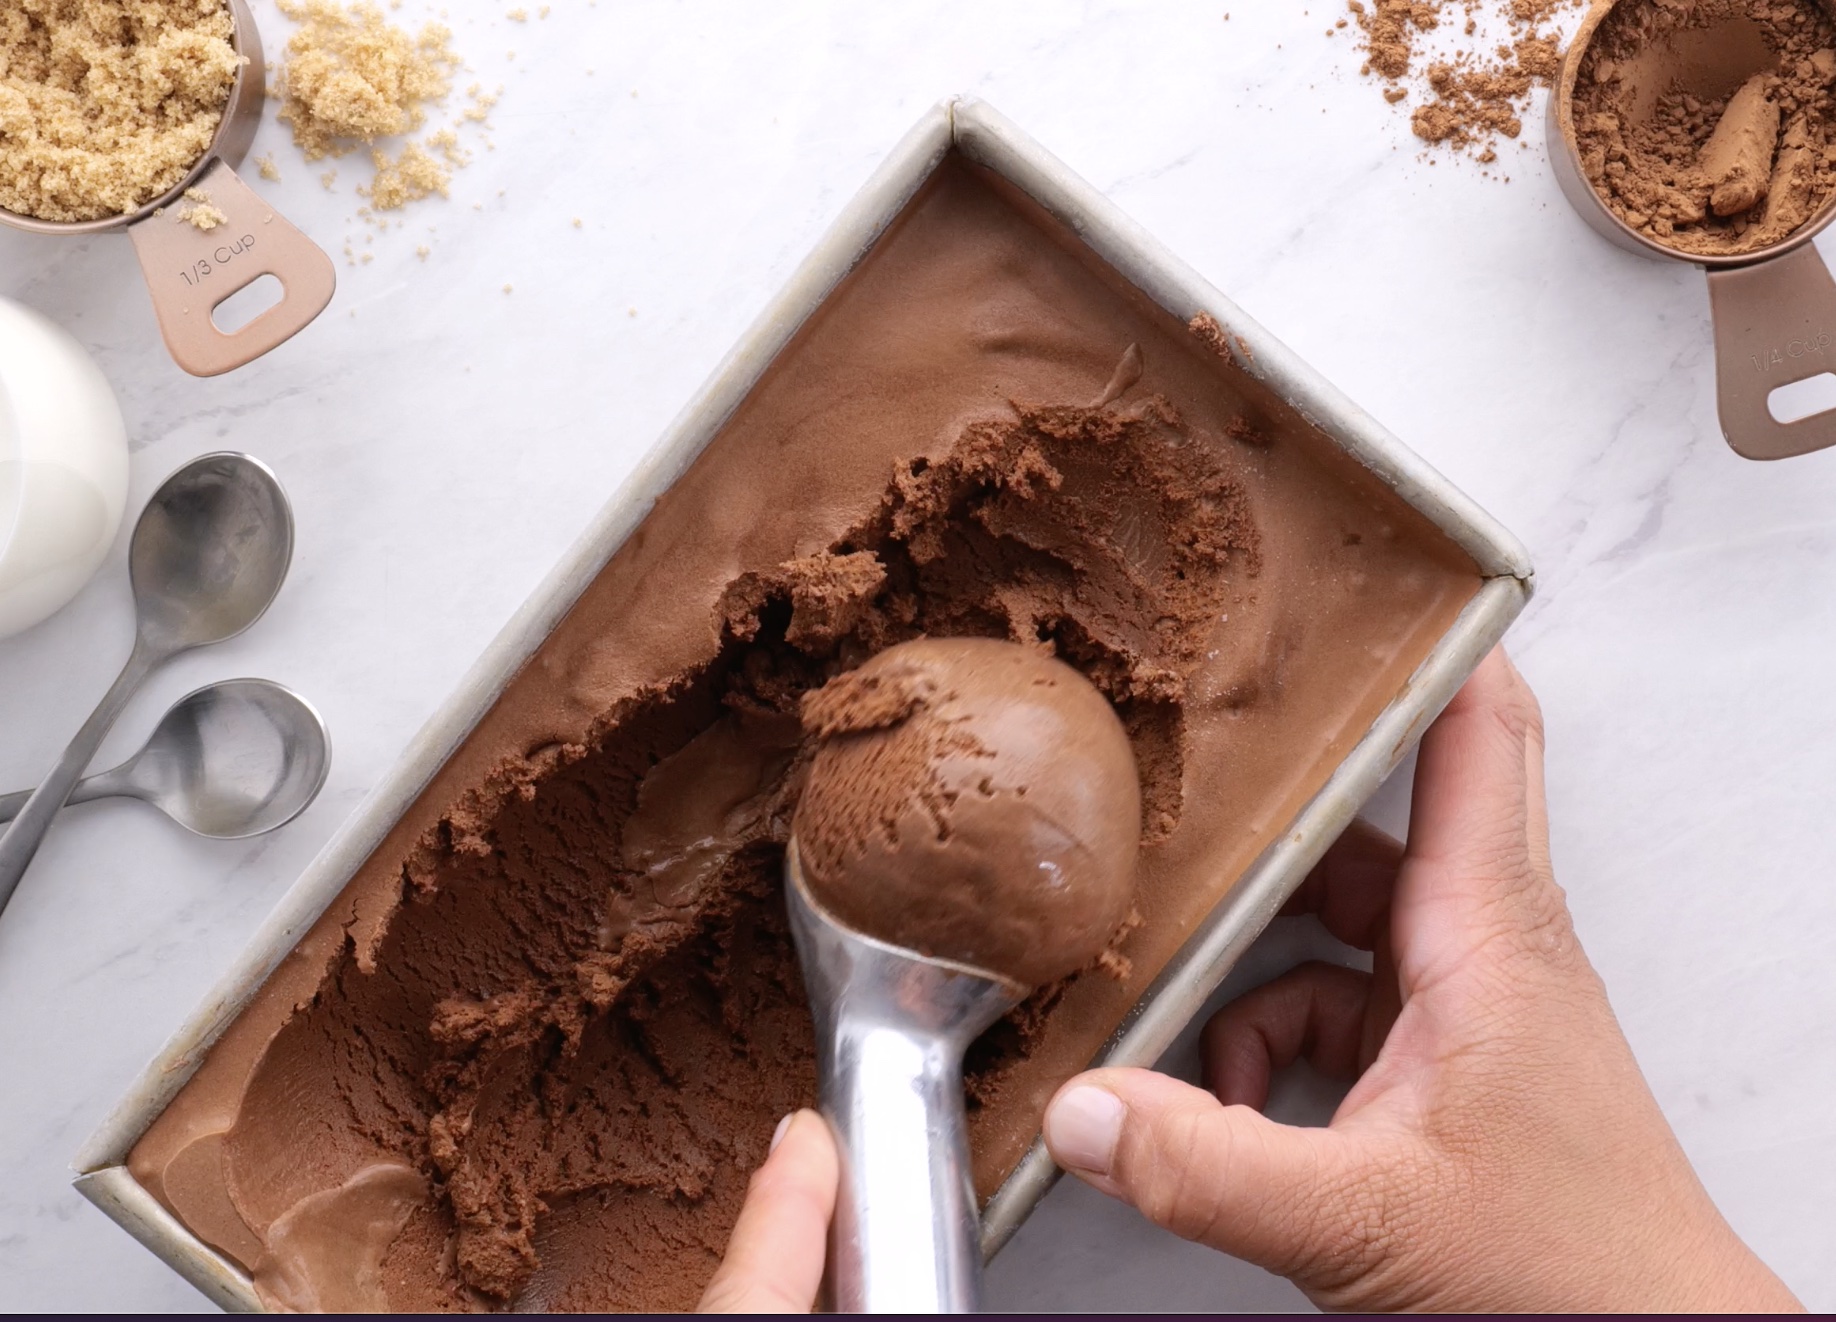 https://www.chewoutloud.com/wp-content/uploads/2023/02/Chocolate-Ice-Cream-Being-Scooped.jpg